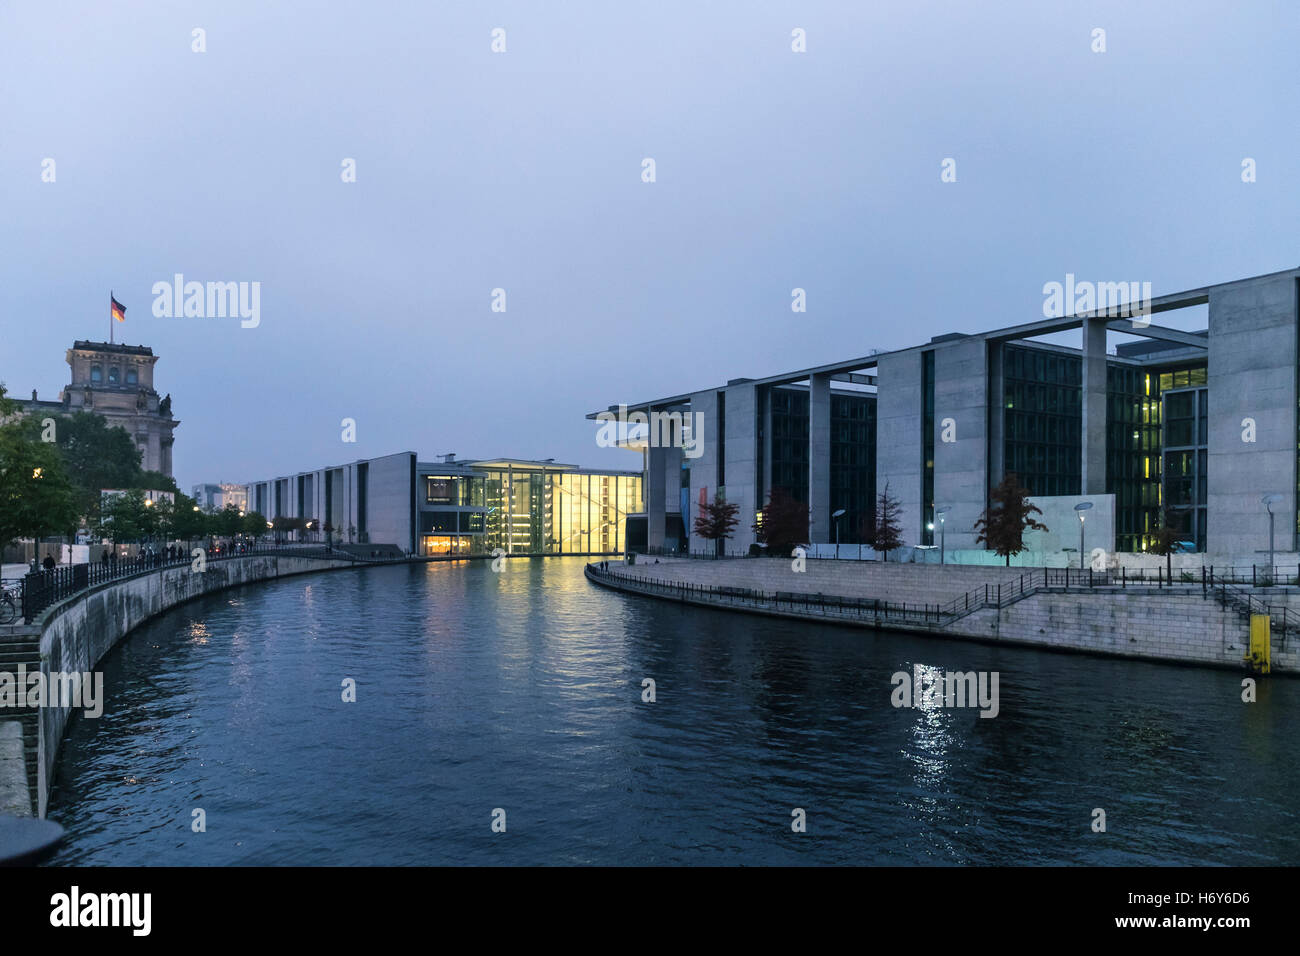 River Spree, Marie-Elisabeth-Lüders-Haus, Reichstag, German government lBuildings at night- Berlin Stock Photo